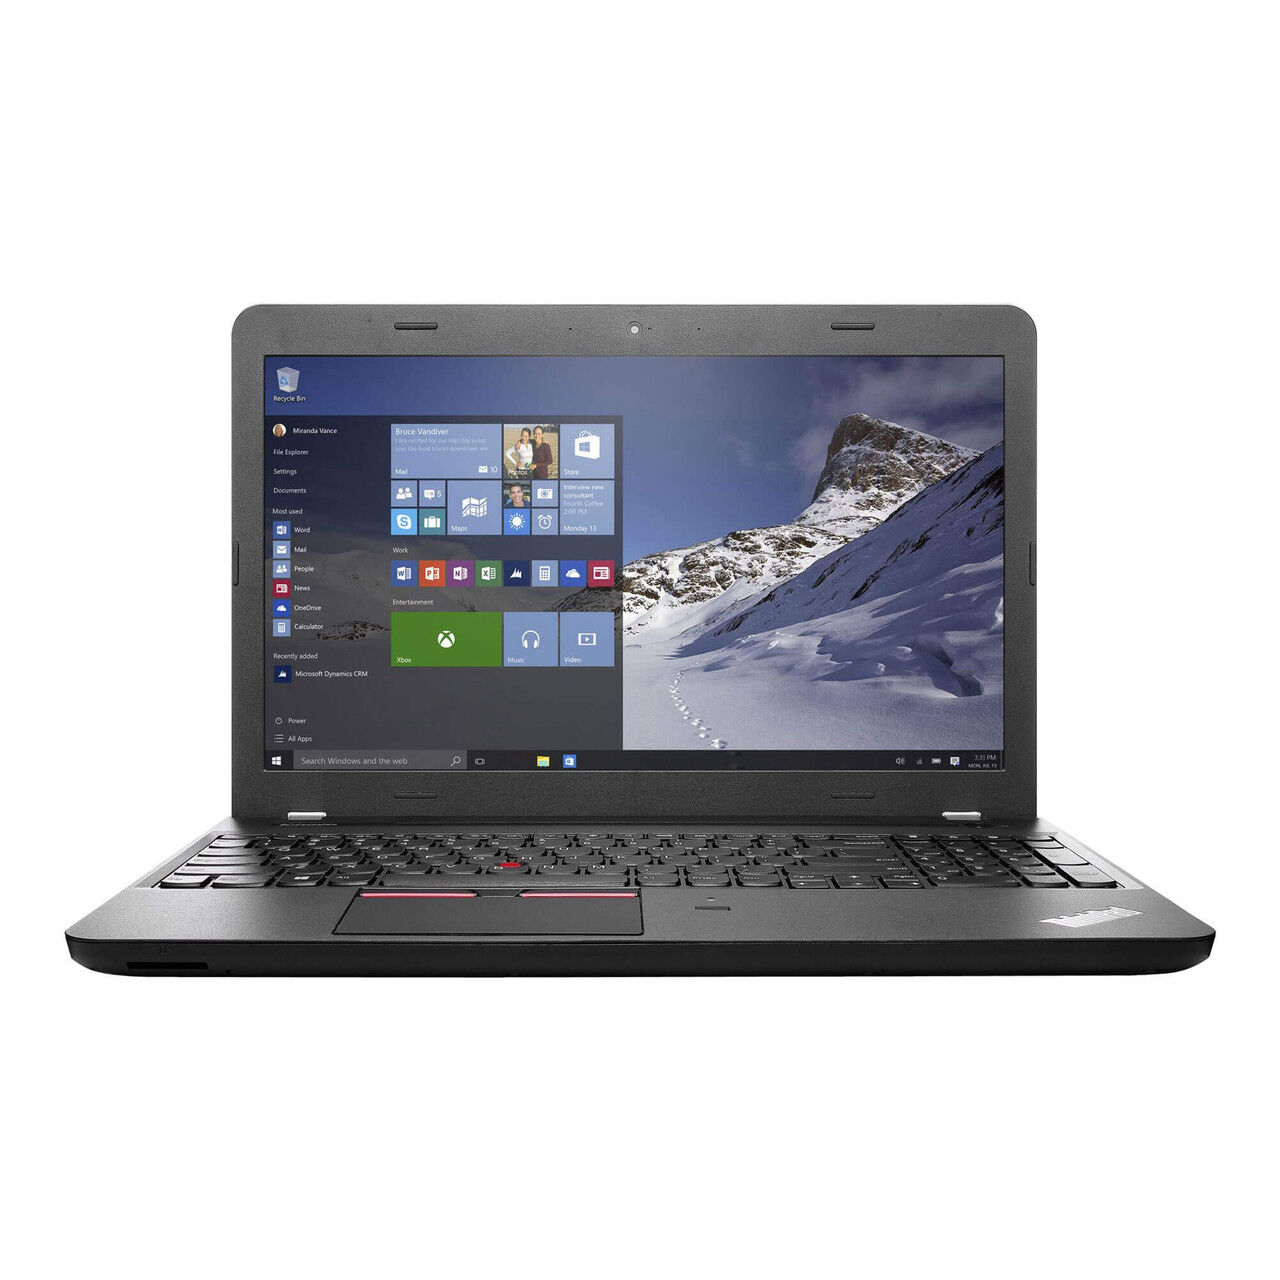 Scratch-N-Dent Lenovo ThinkPad E560 Laptop Computer: 15.6" Display, Intel Core i5 (6th Gen), Windows 10 Pro, Webcam, Fingerprint Reader